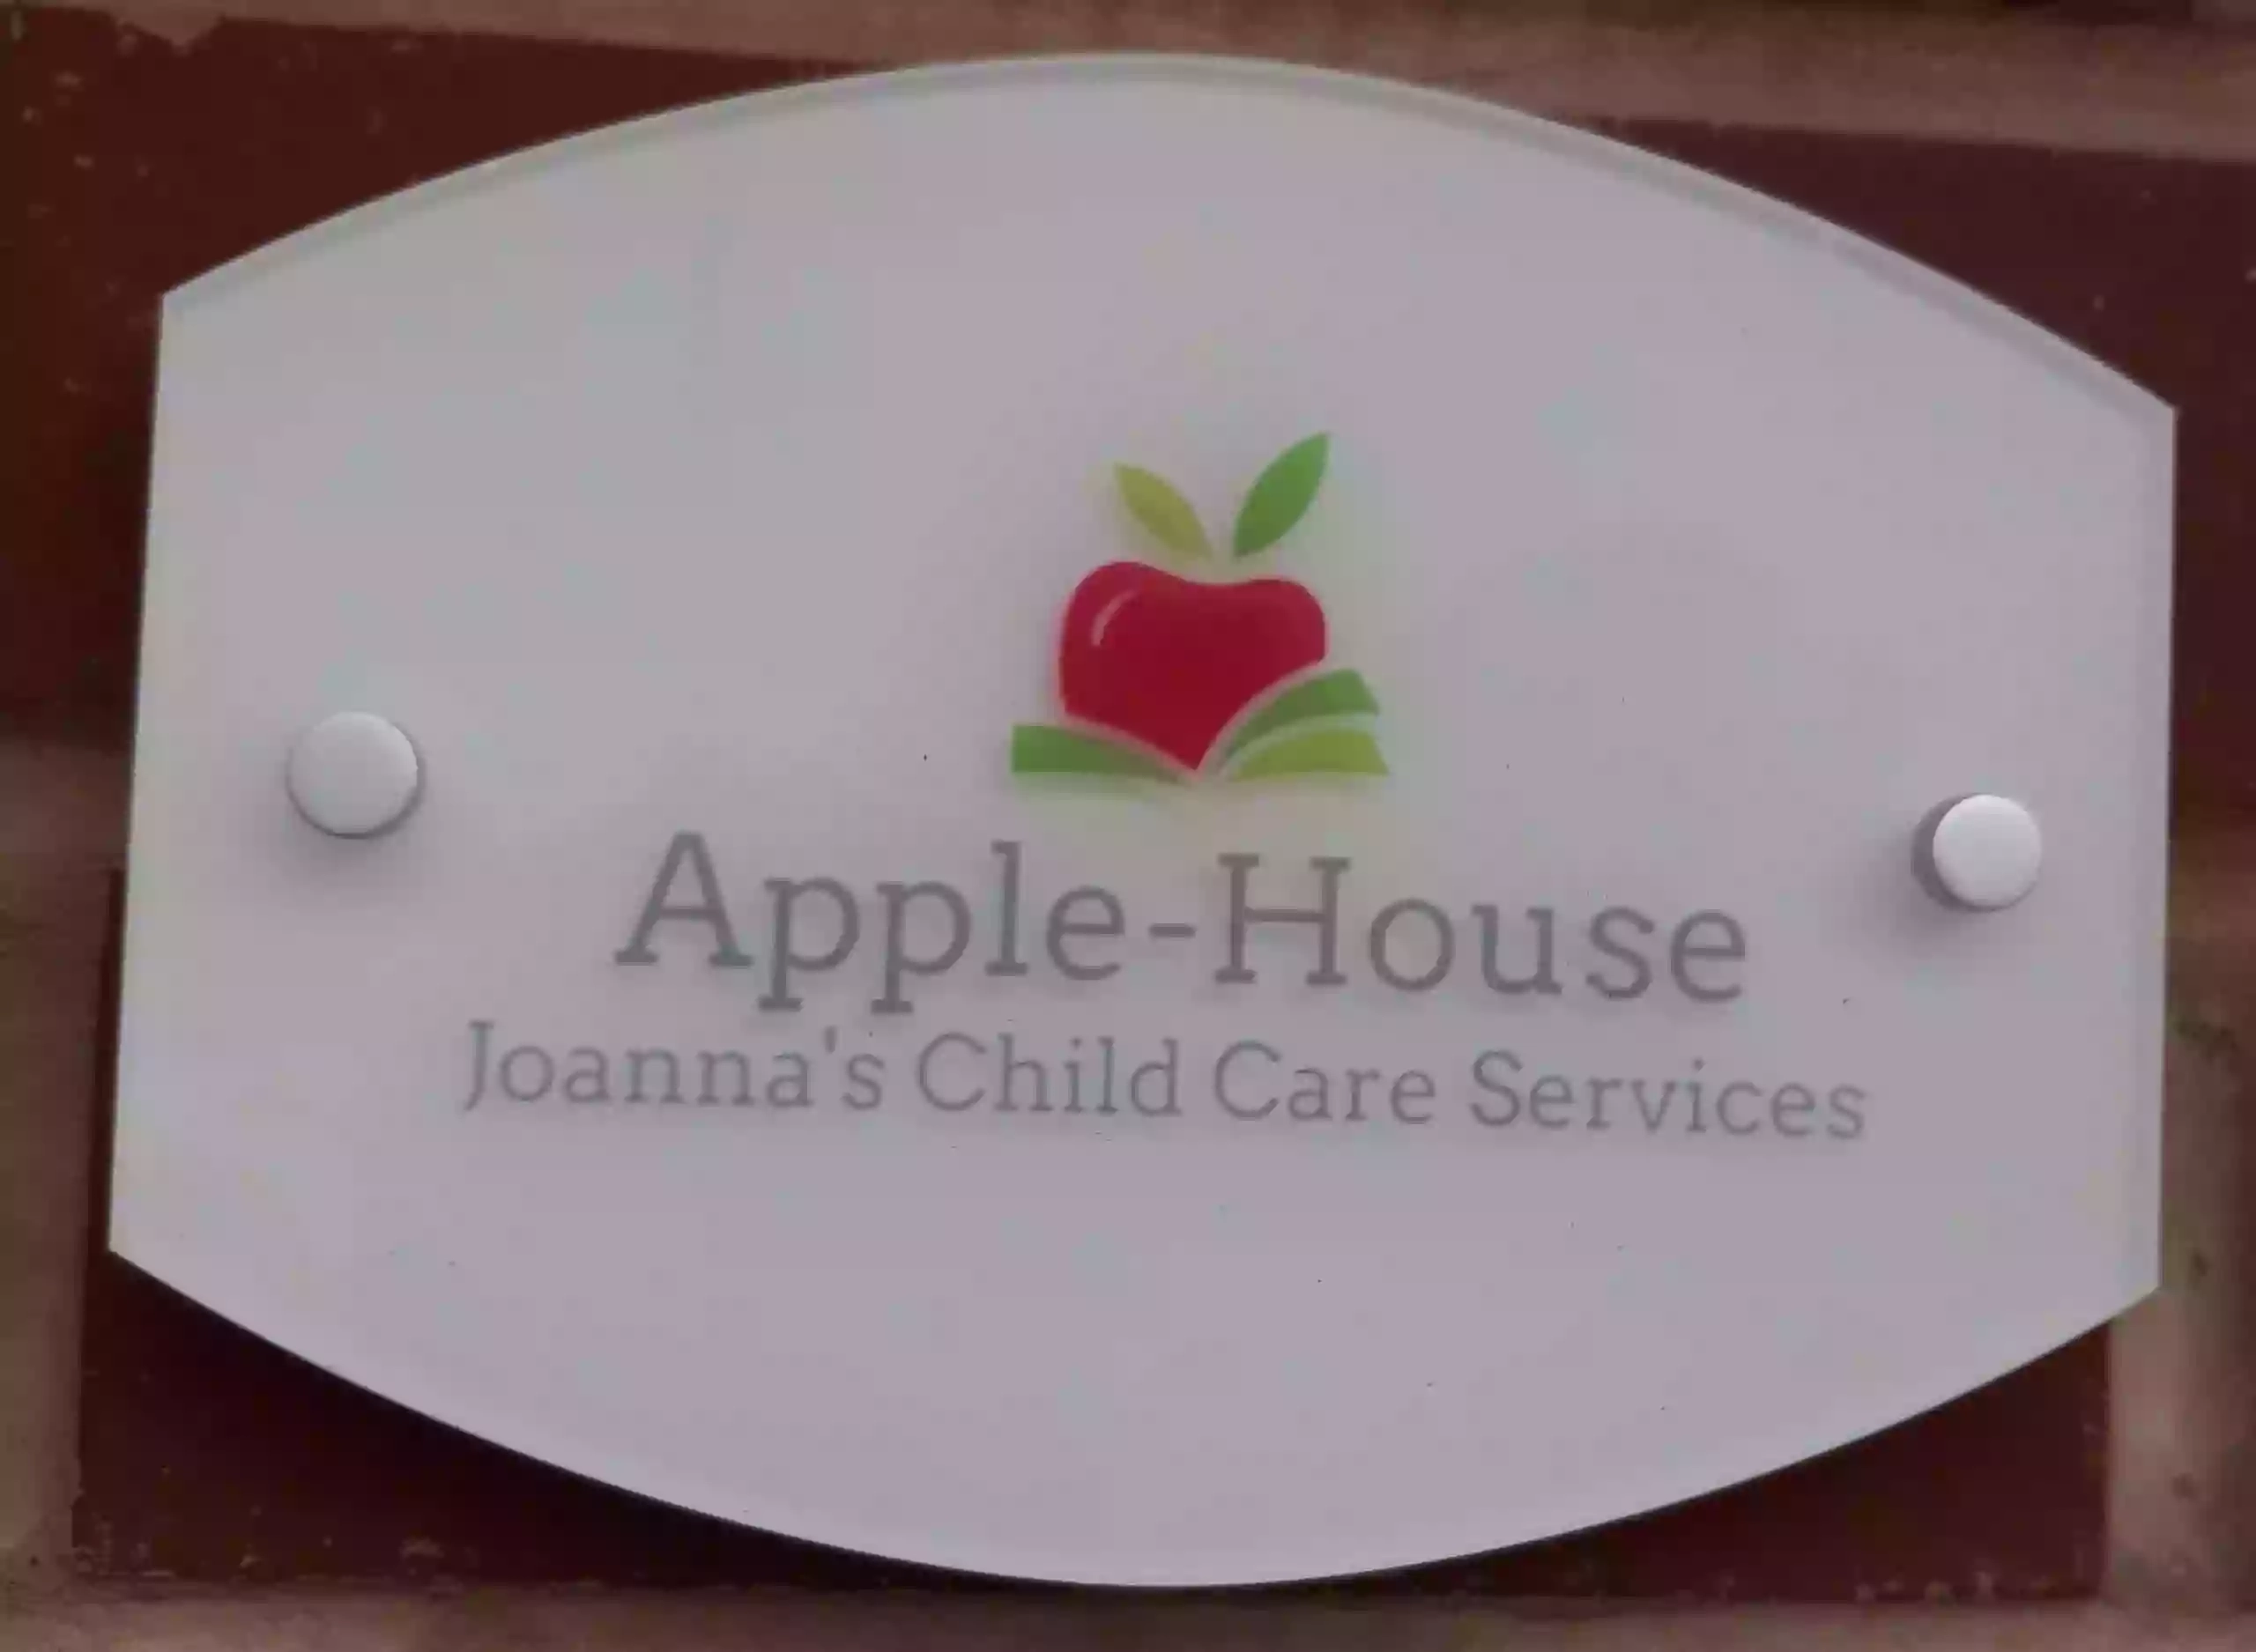 Apple-house, Joanna's Child Care Services